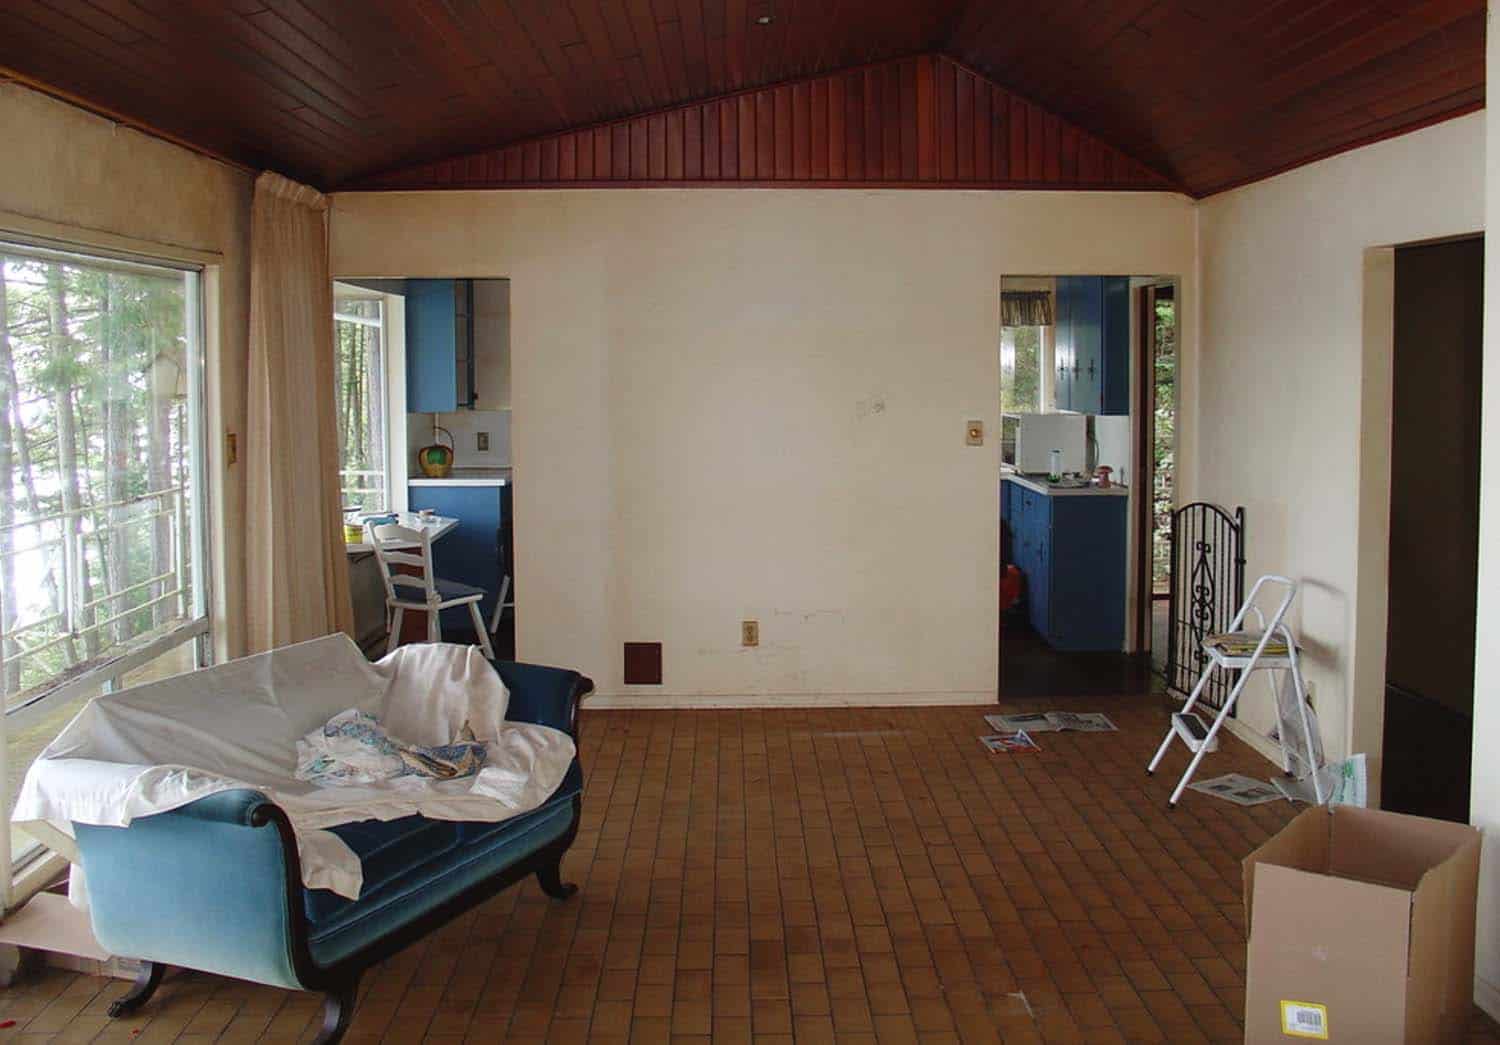 living-room-before-remodel